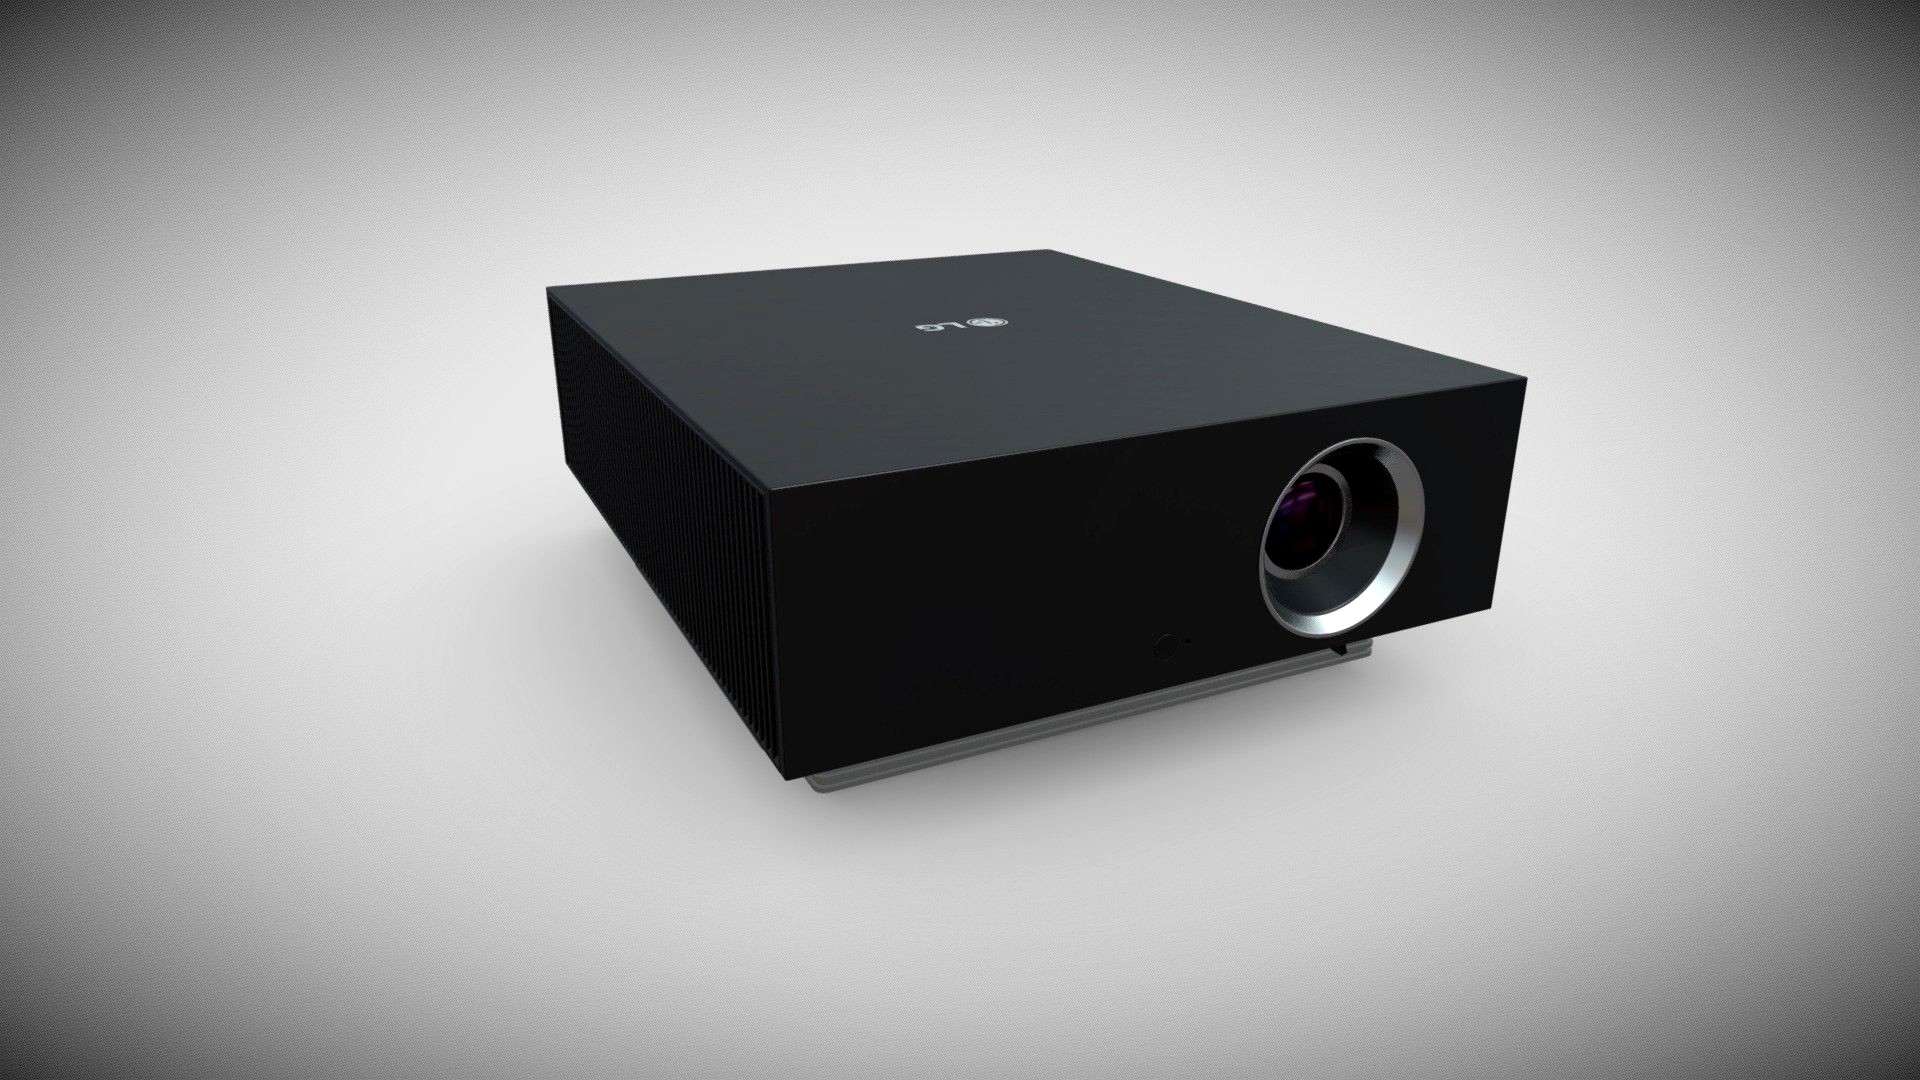 Laser CineBeam HU810P Video Projector by LG